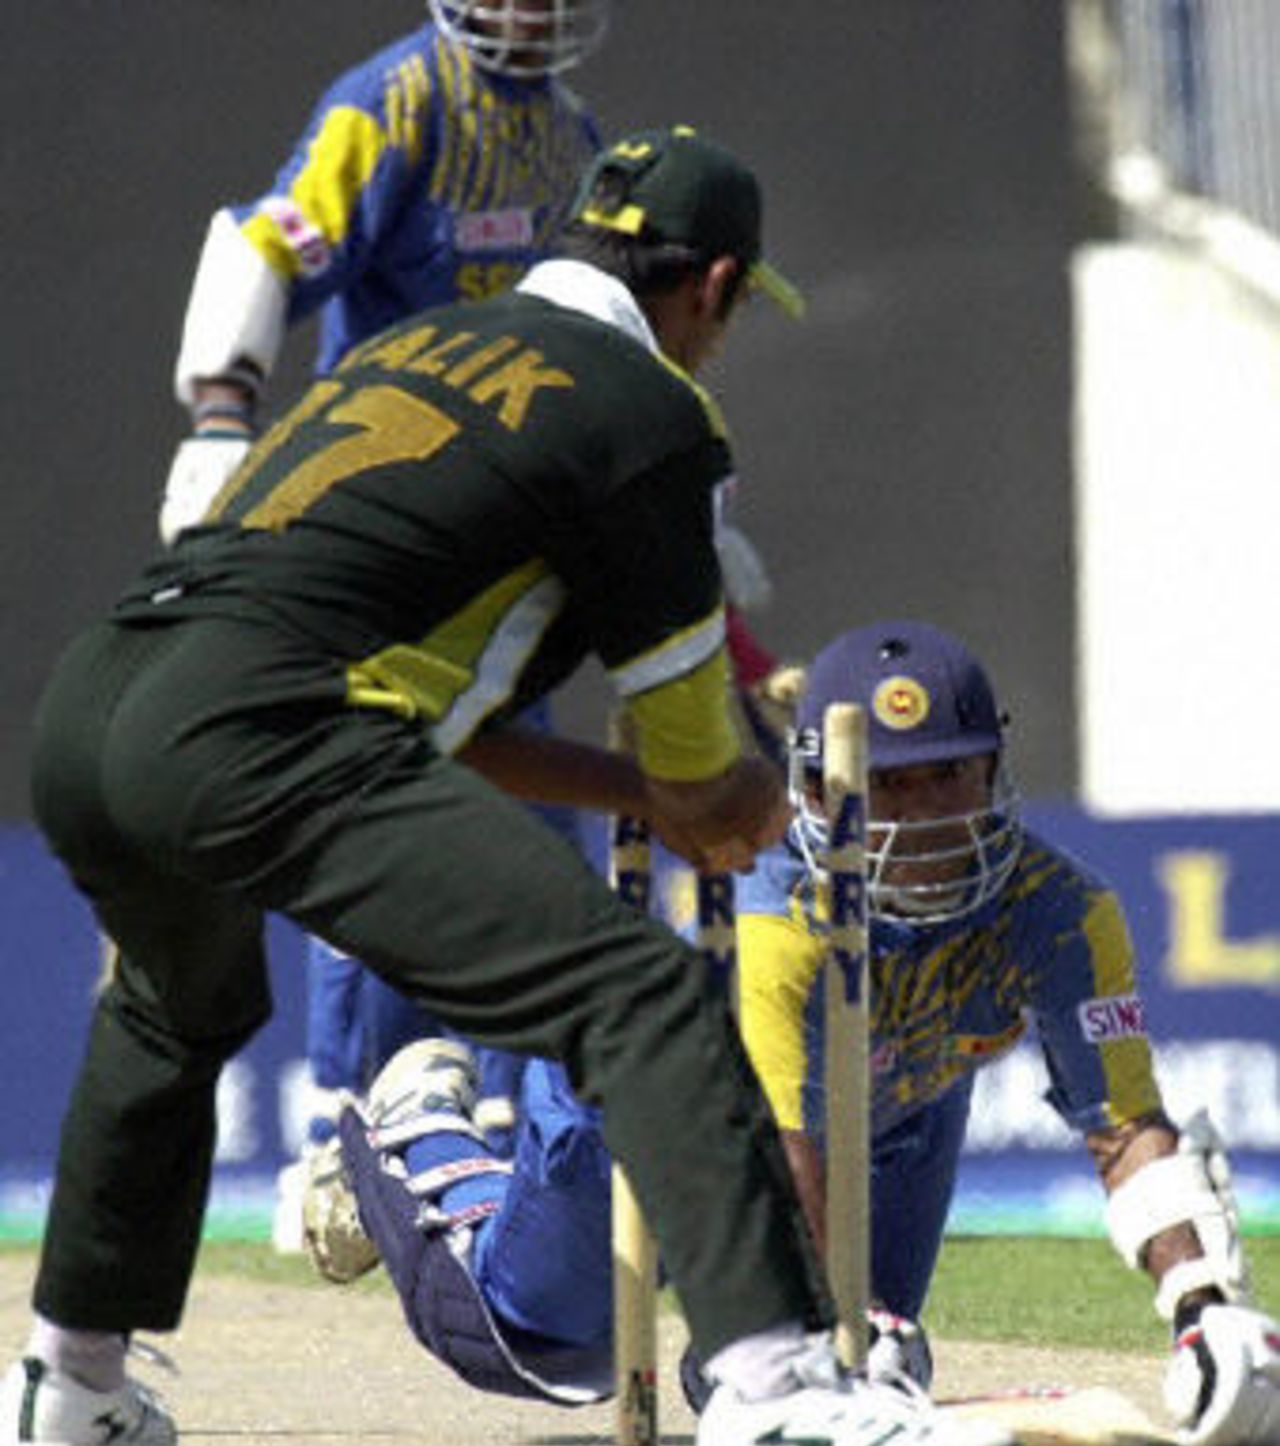 Romesh Kaluwitharana gains his ground as Shoaib Malik uproots the stumps, Final at Sharjah, Pakistan v Sri Lanka, 20 April 2001